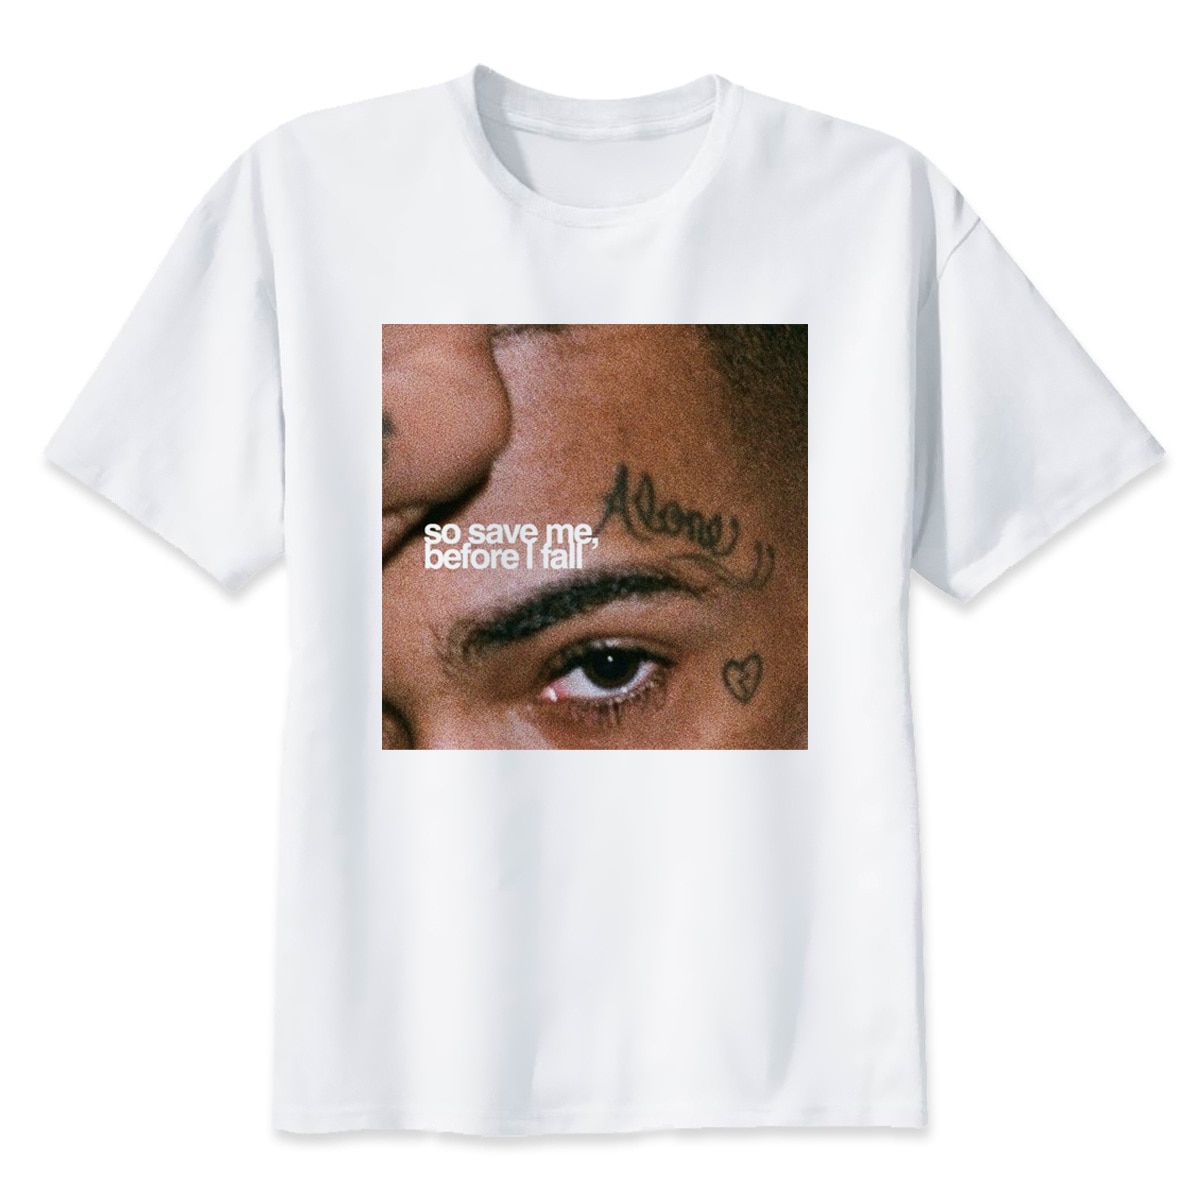 xxx eye tattoo t shirt 7414 - Xxxtentacion Store